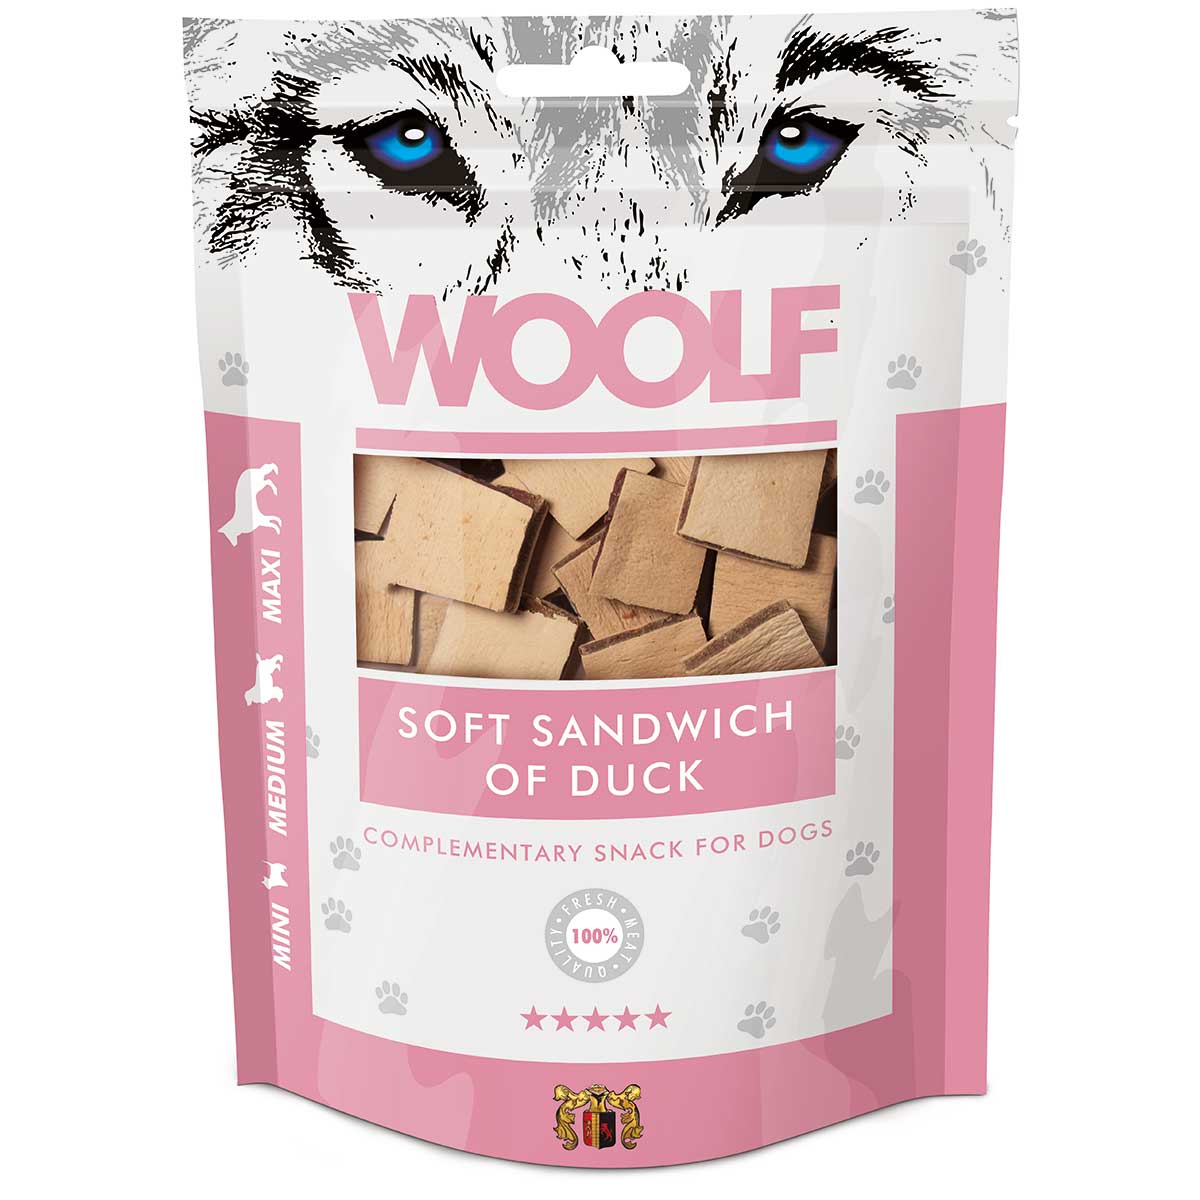 Woolf Dog treat soft sandwich of duck